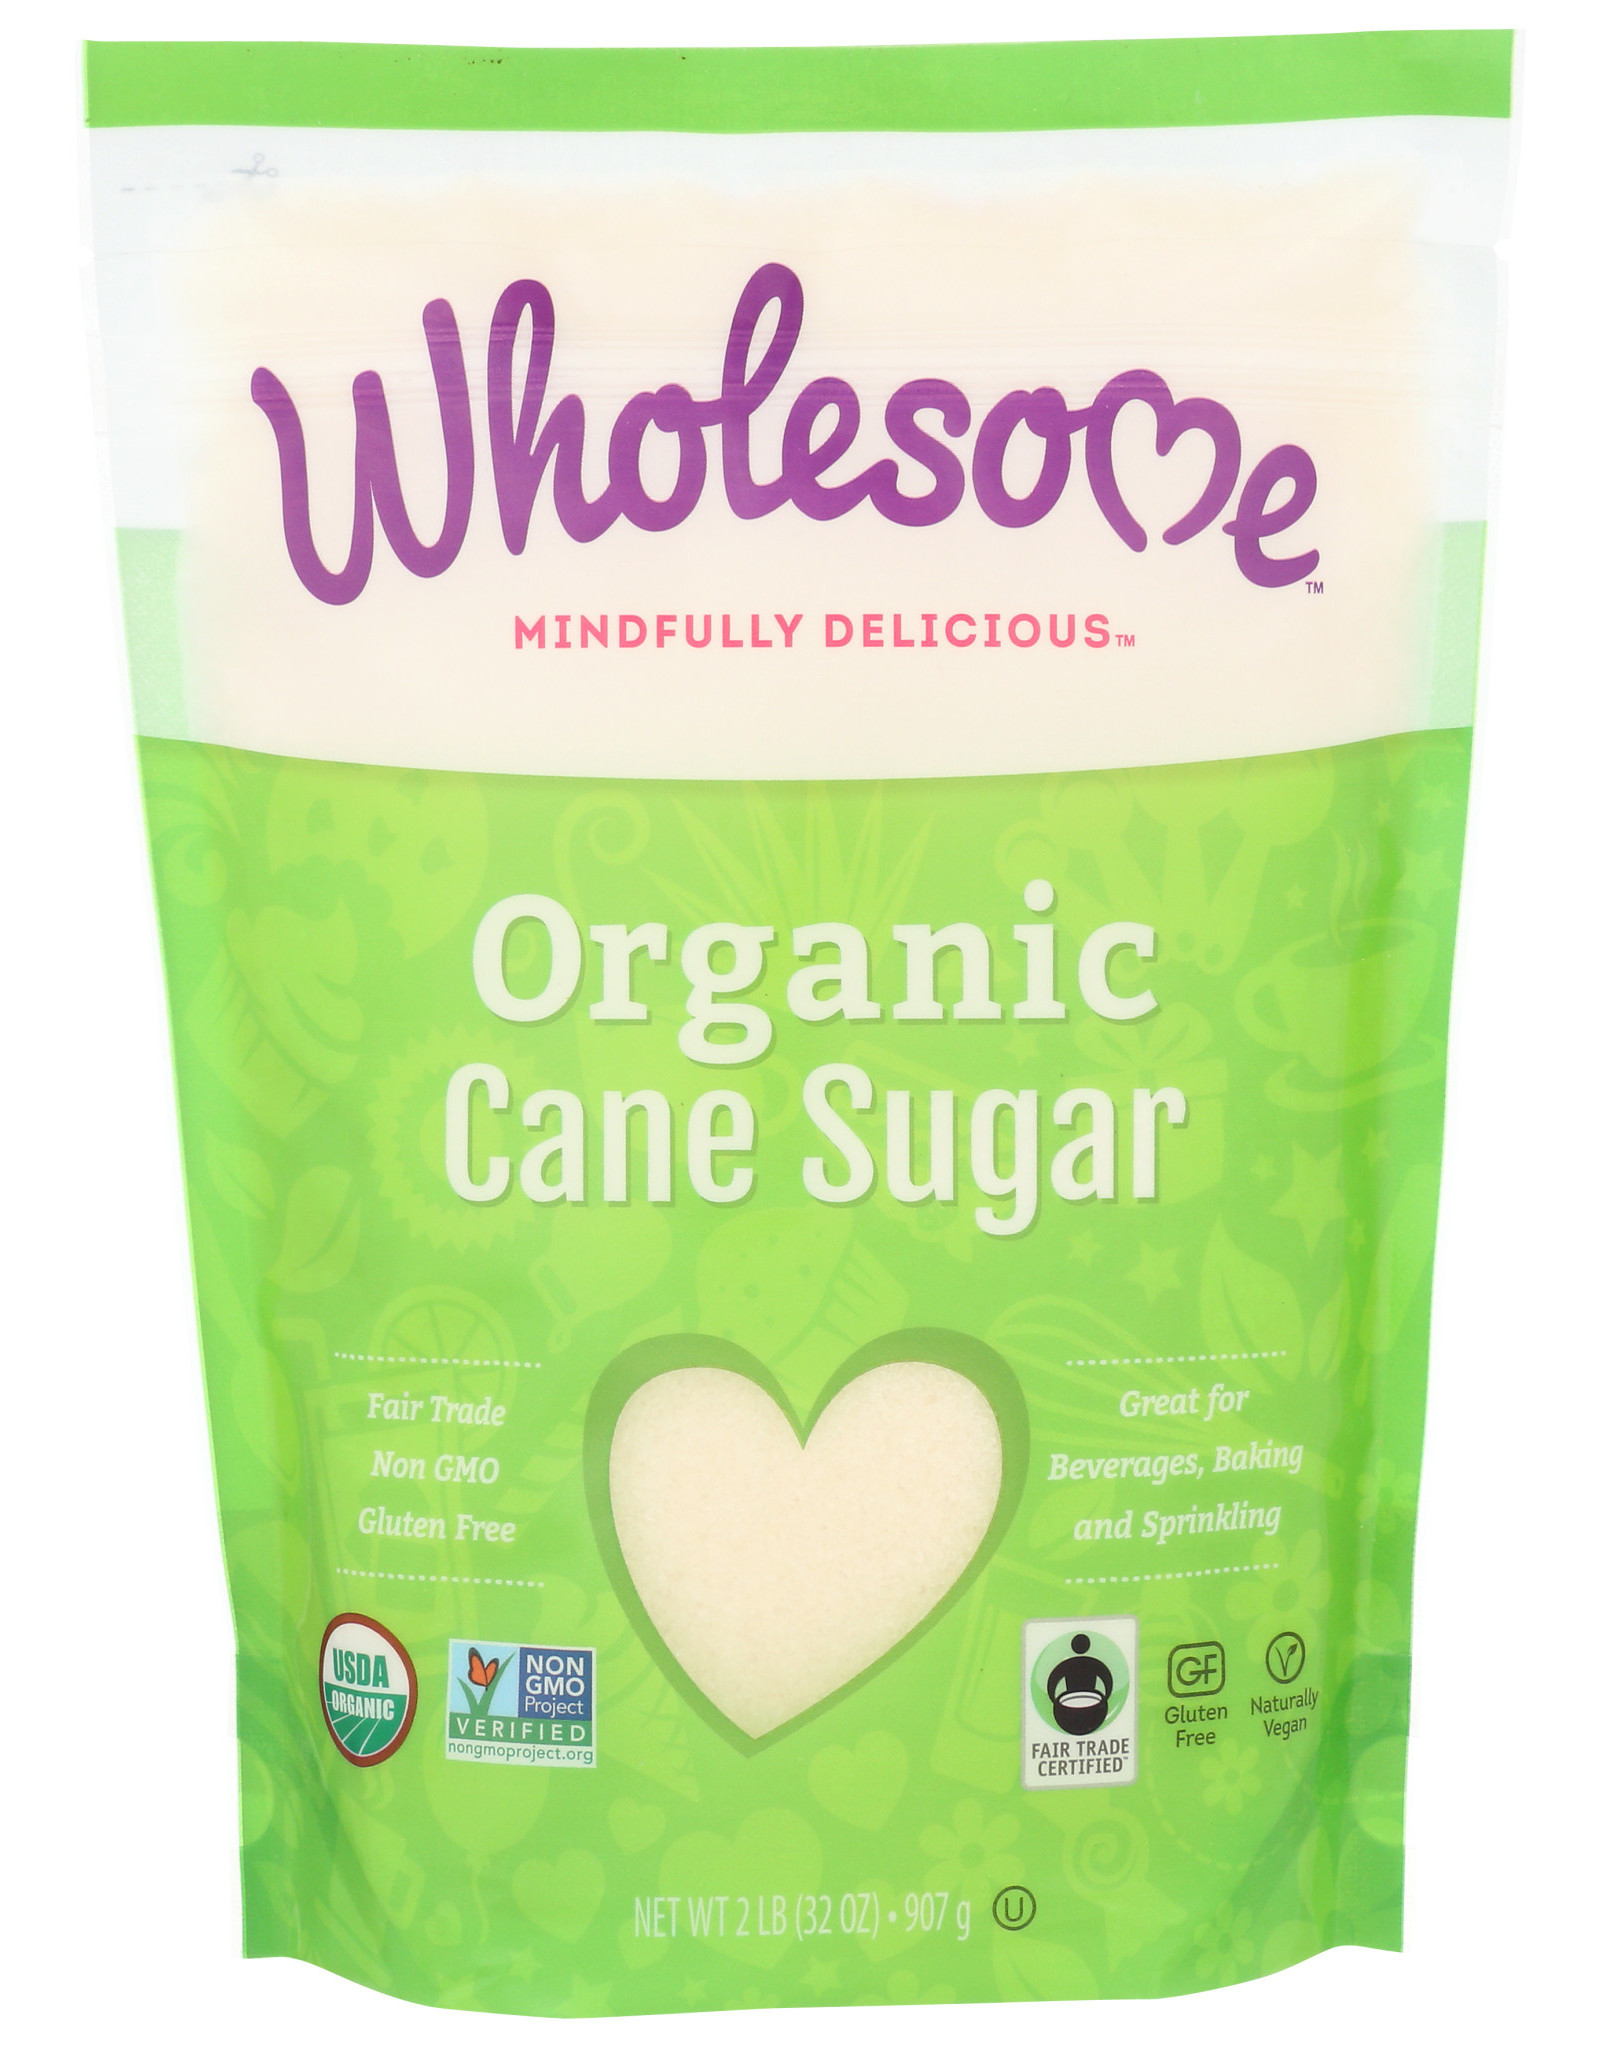 Wholesome OG Cane Sugar 32 oz